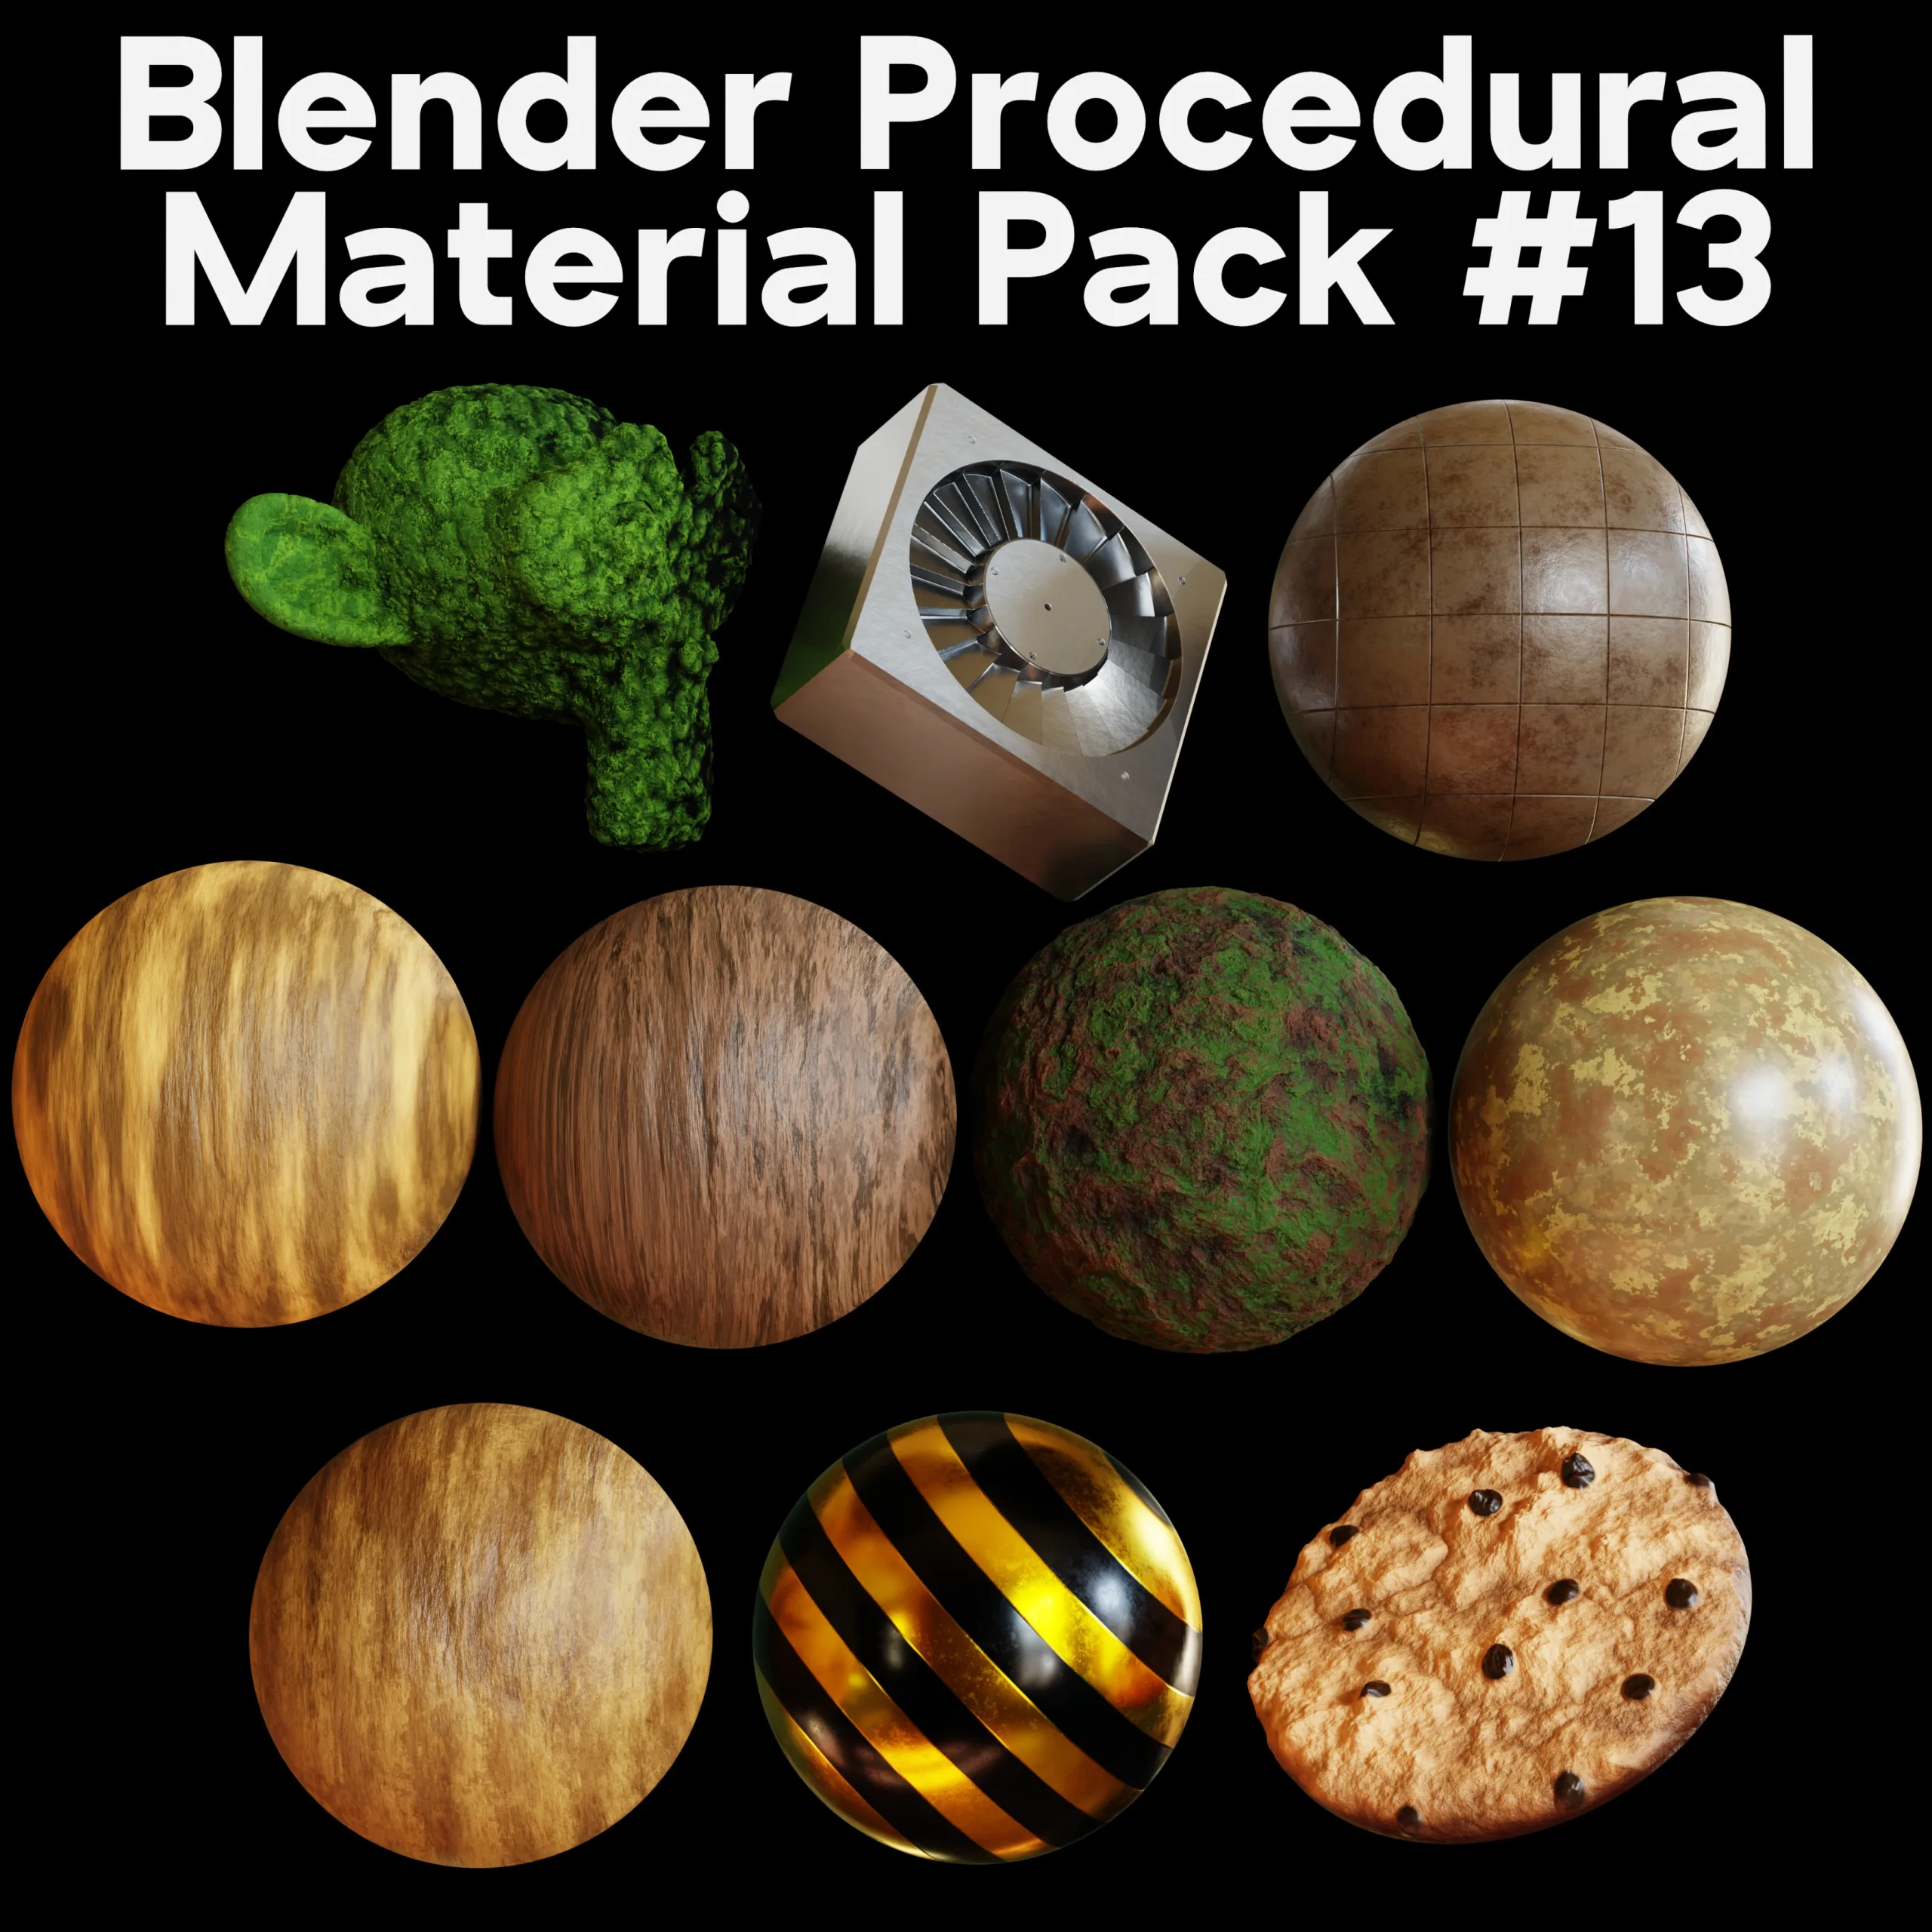 Blender Procedural Material Pack #13